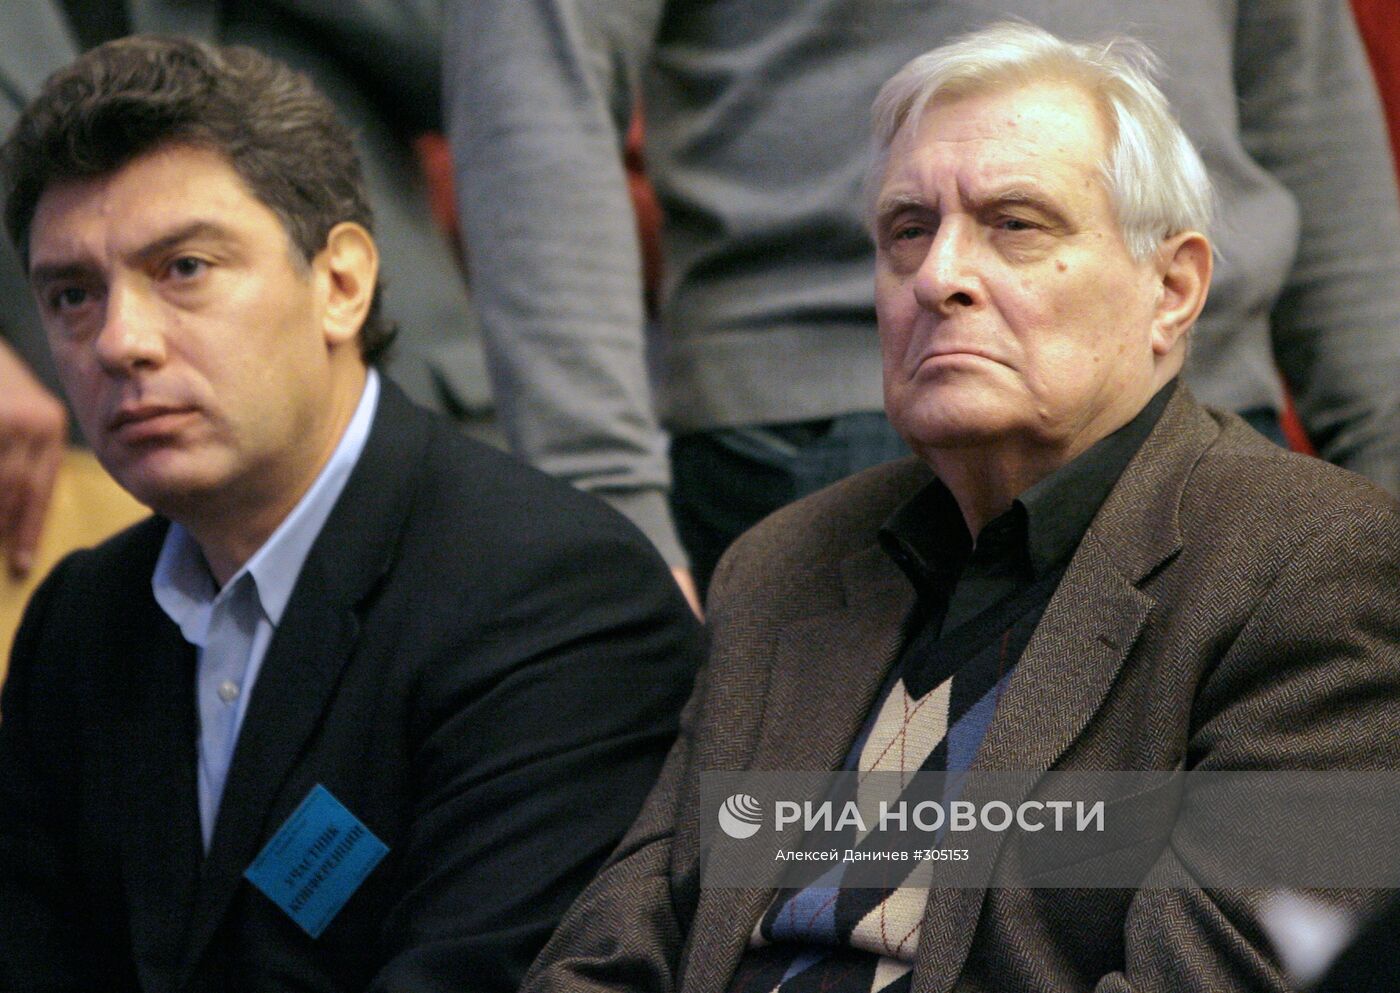 Борис Немцов, Олег Басилашвили